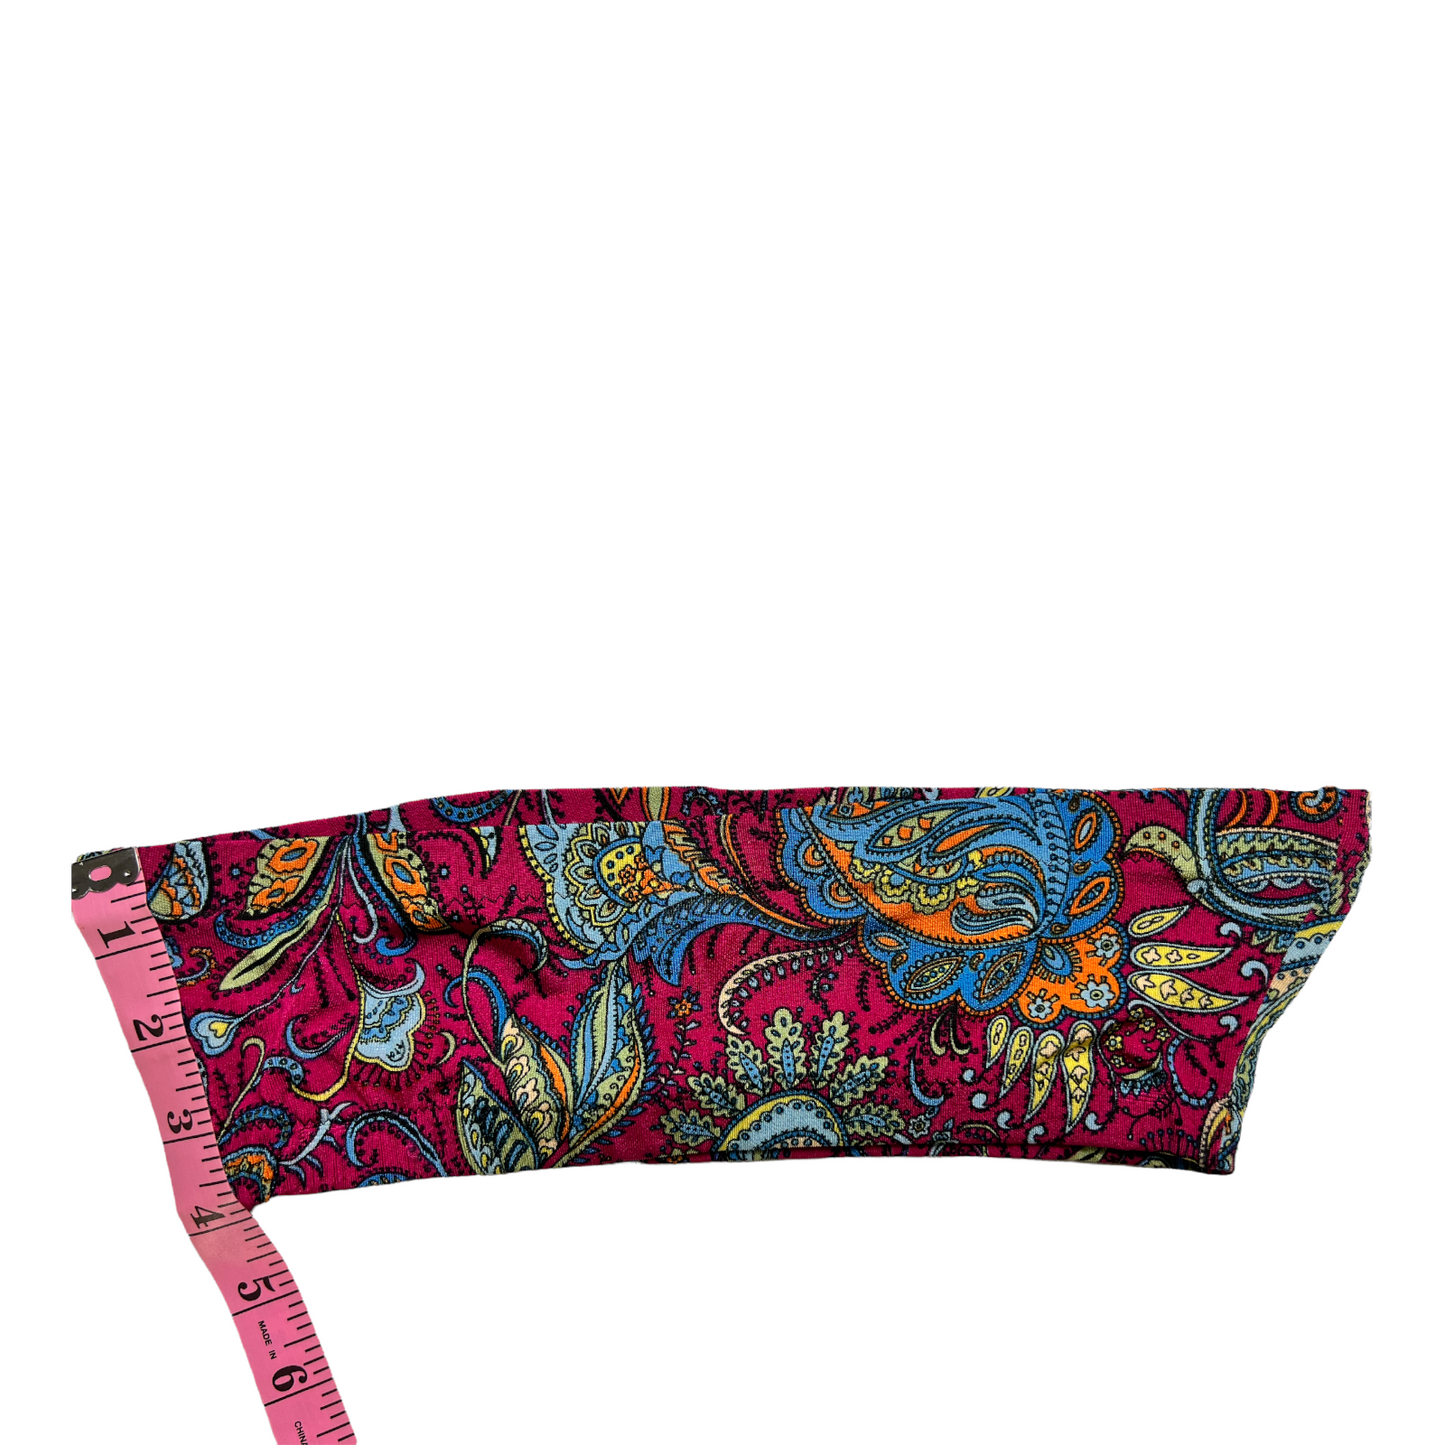 New Extreme Gear Plum Multi Color Strapless Bralette Swimwear Top, Size M